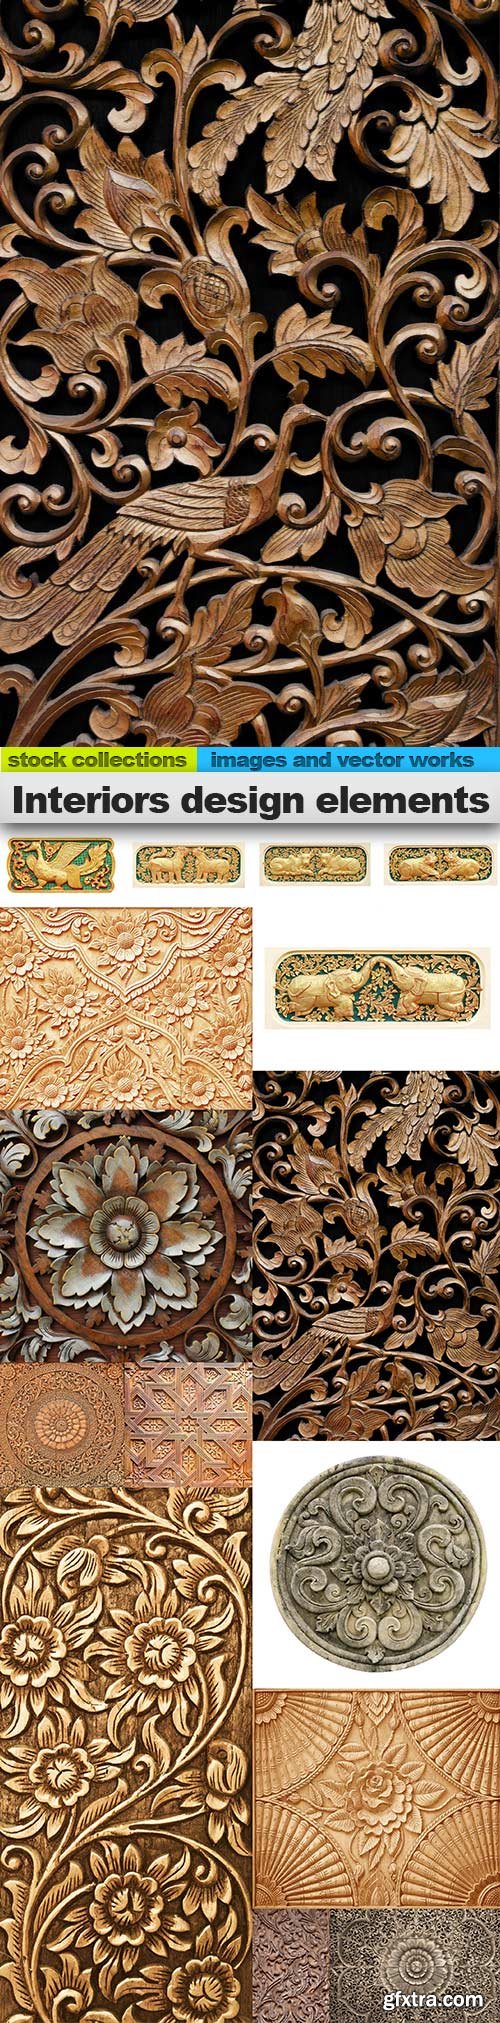 Interiors design elements, 15 x UHQ JPEG